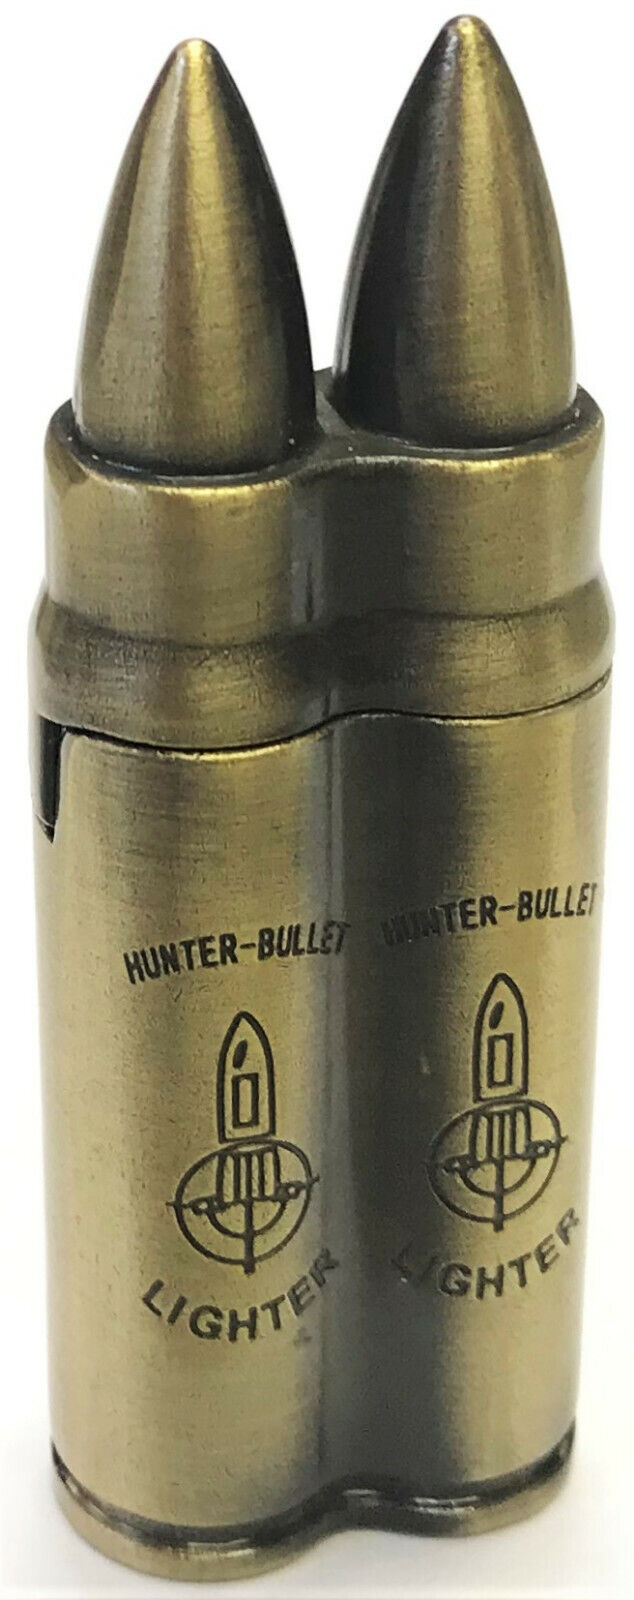 Collectible Novelty Double Bullet Refillable Lighter 1614-2 eBay